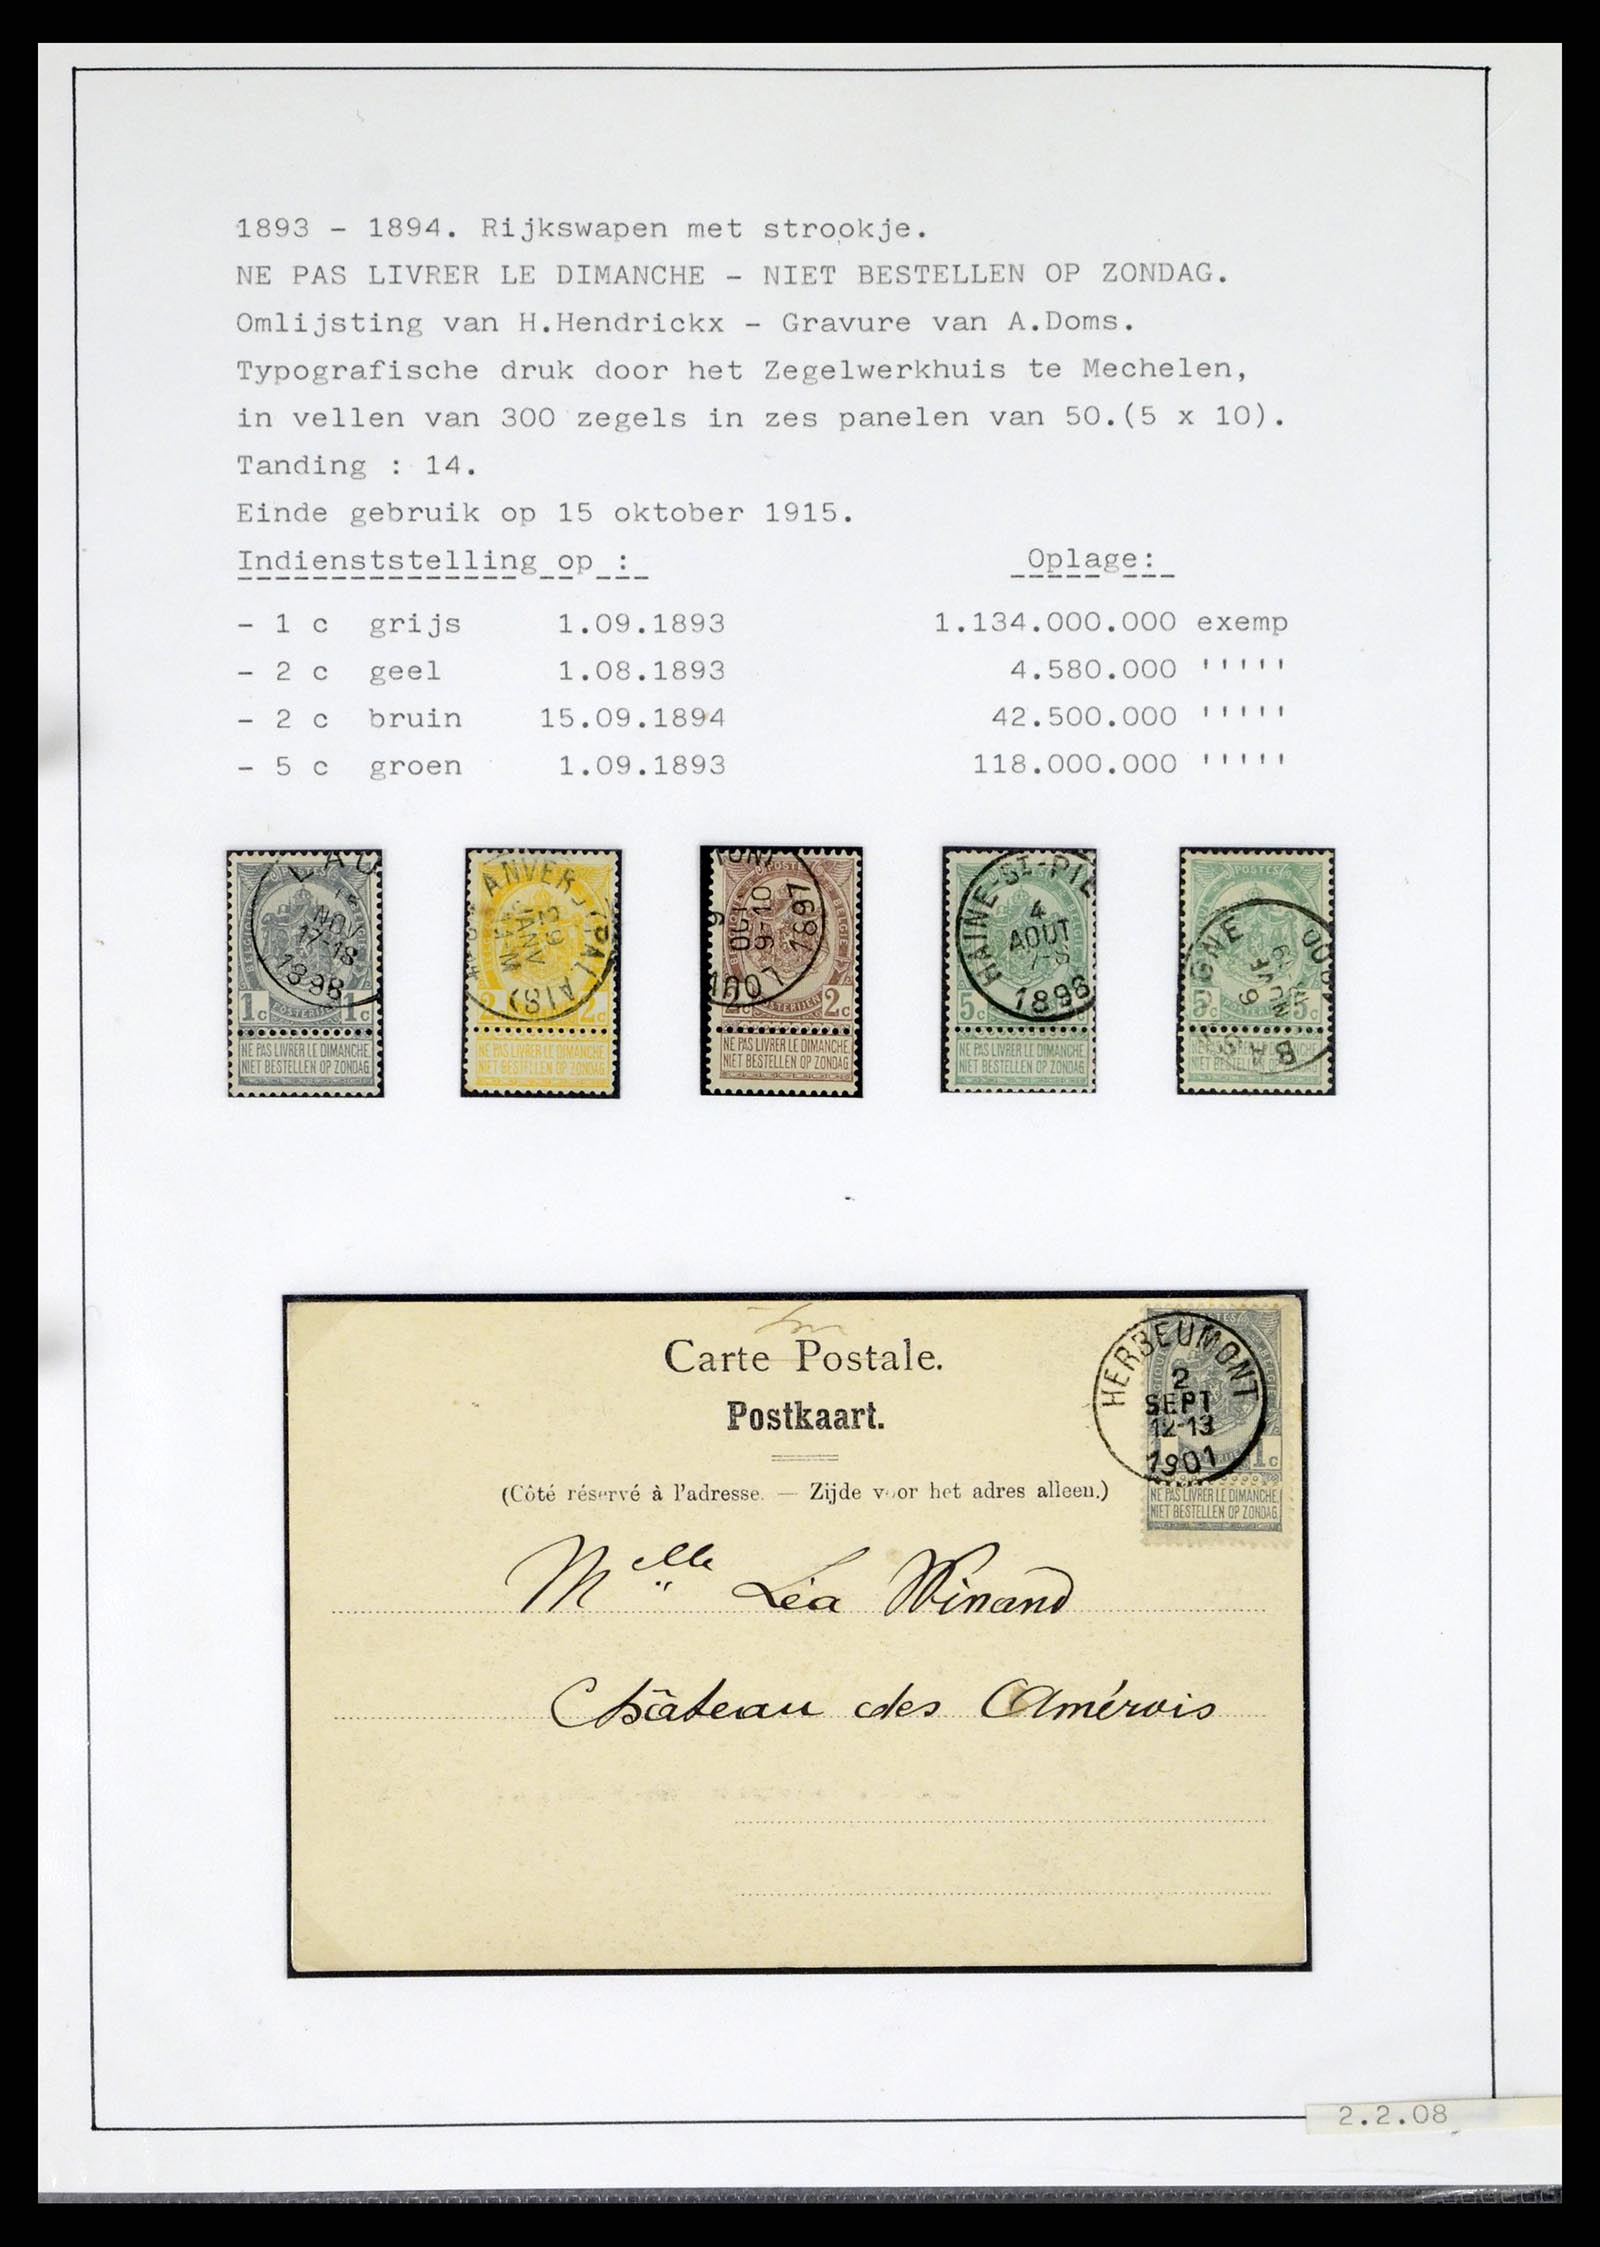 38033 0023 - Stamp collection 38033 Belgiùm classic 1849-1905.